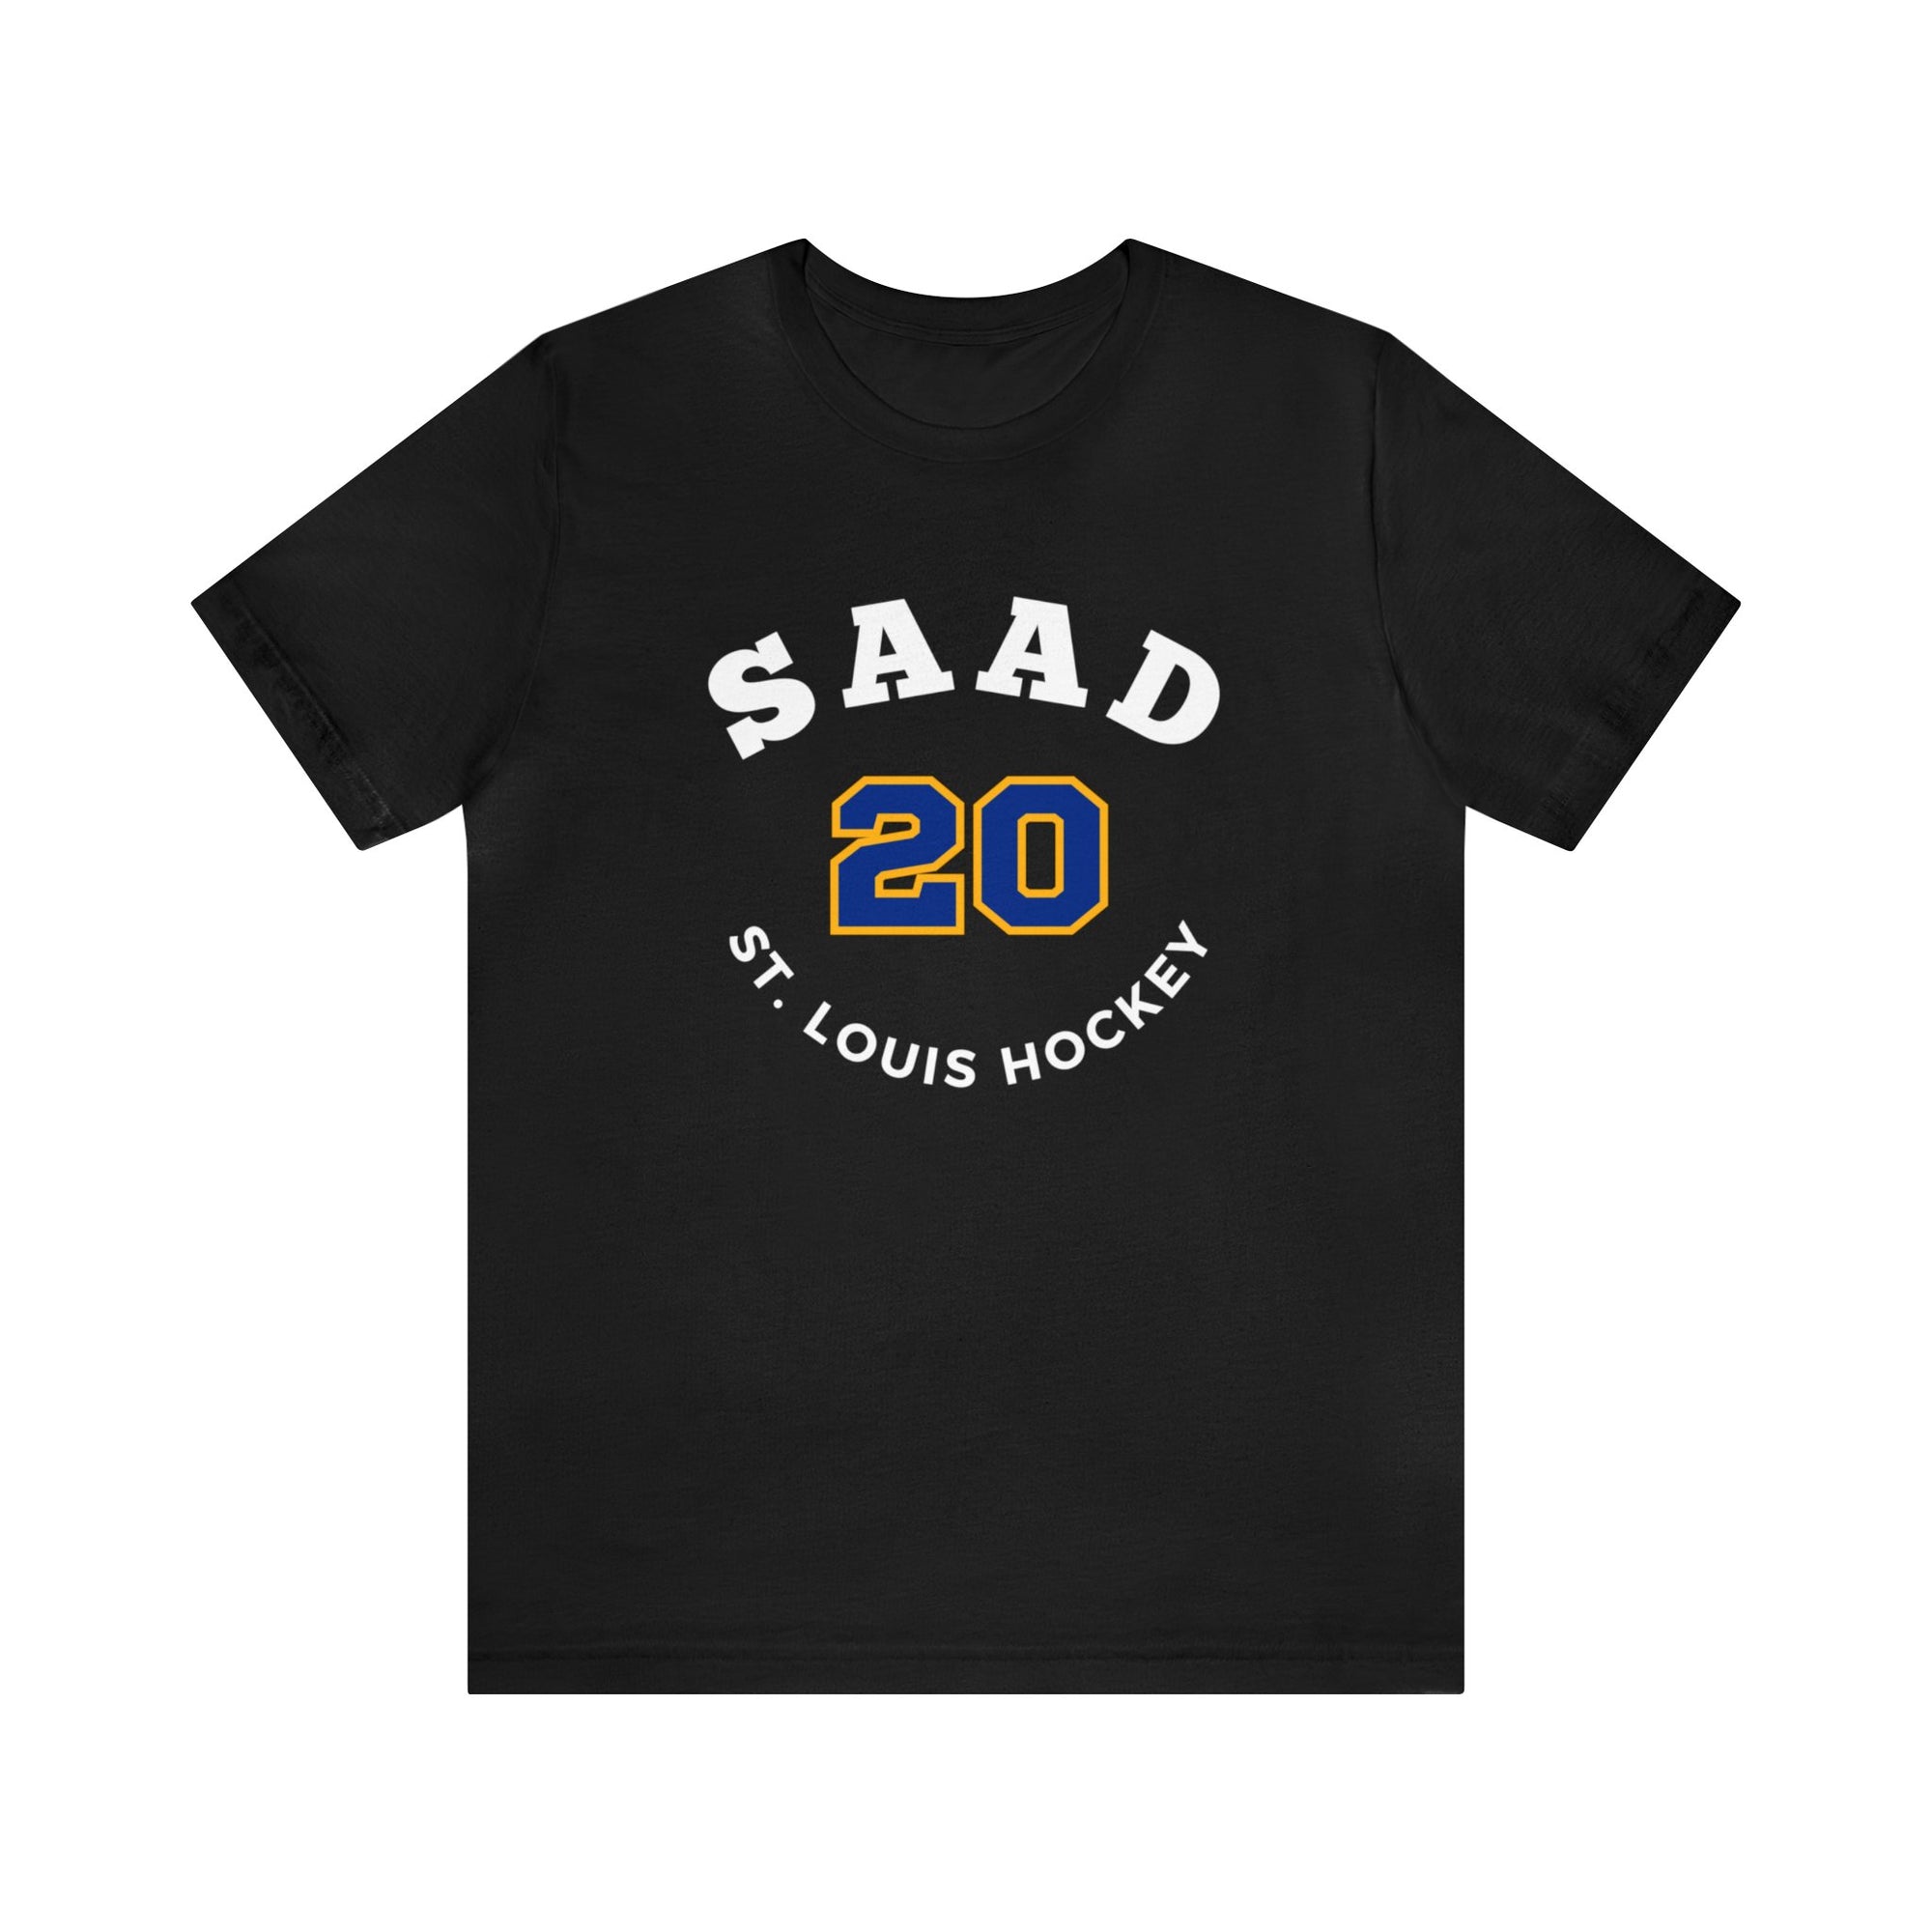 Saad 20 St. Louis Hockey Number Arch Design Unisex T-Shirt